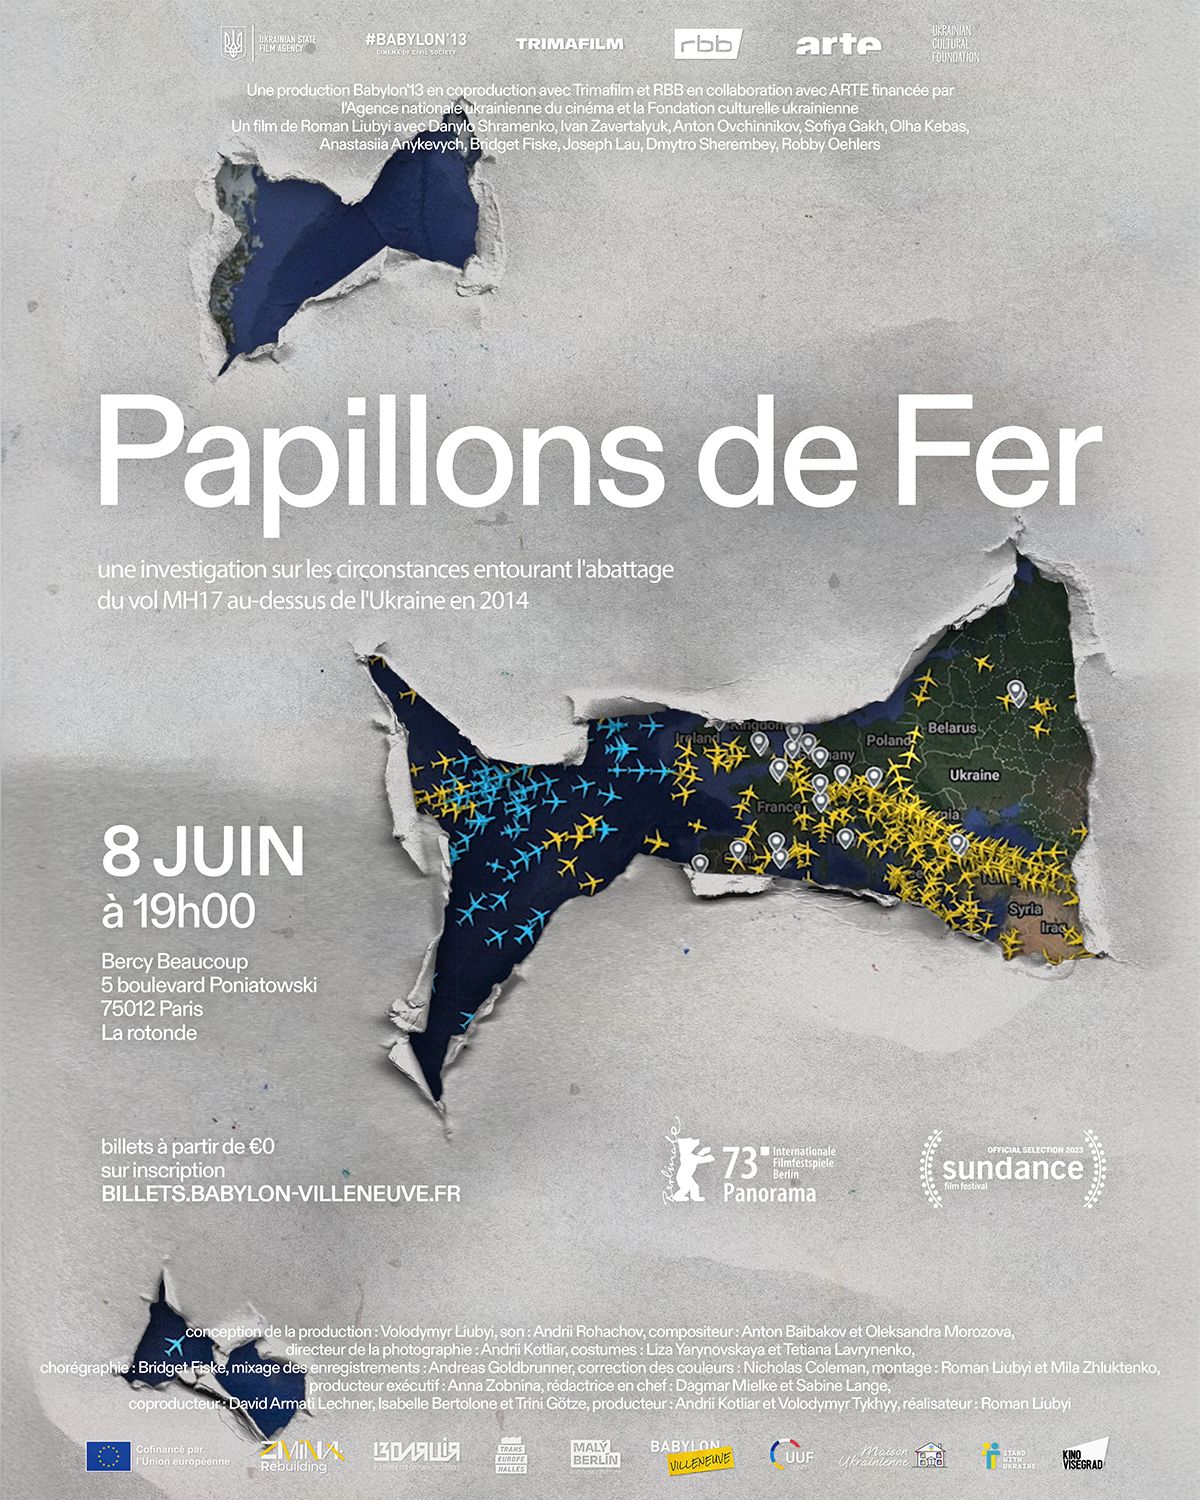 Roman Liubyi’s “Iron Butterflies” screening in Paris